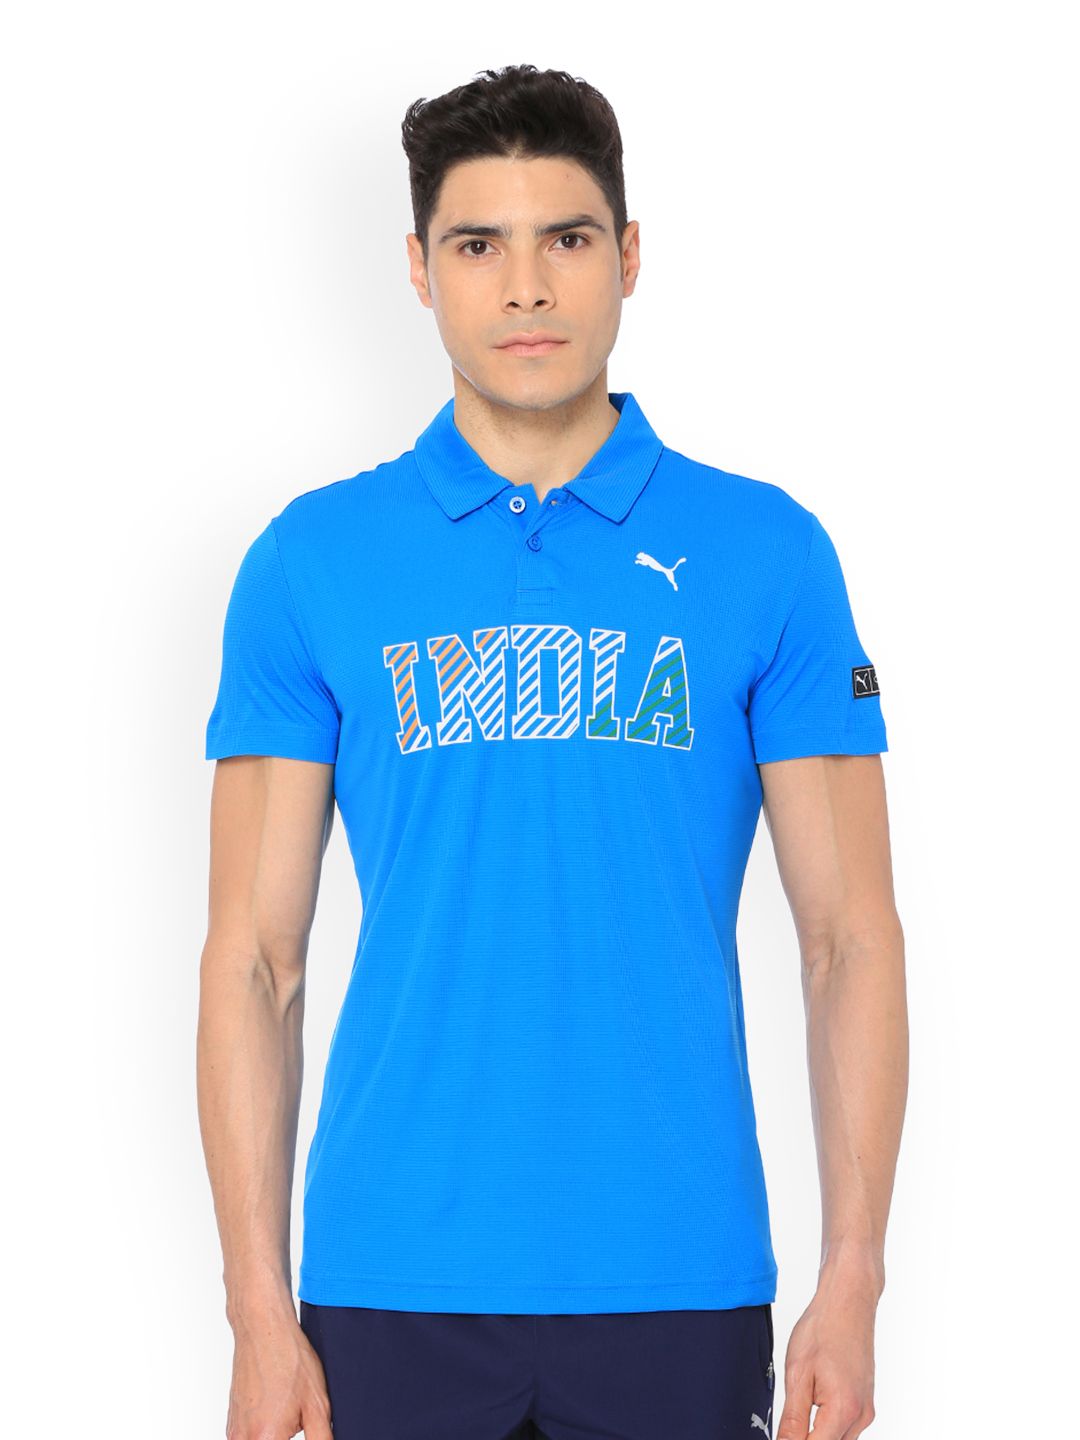 Puma Blue one8 Cricket Virat Kohli Printed Polo Collar T-shirt Price in India